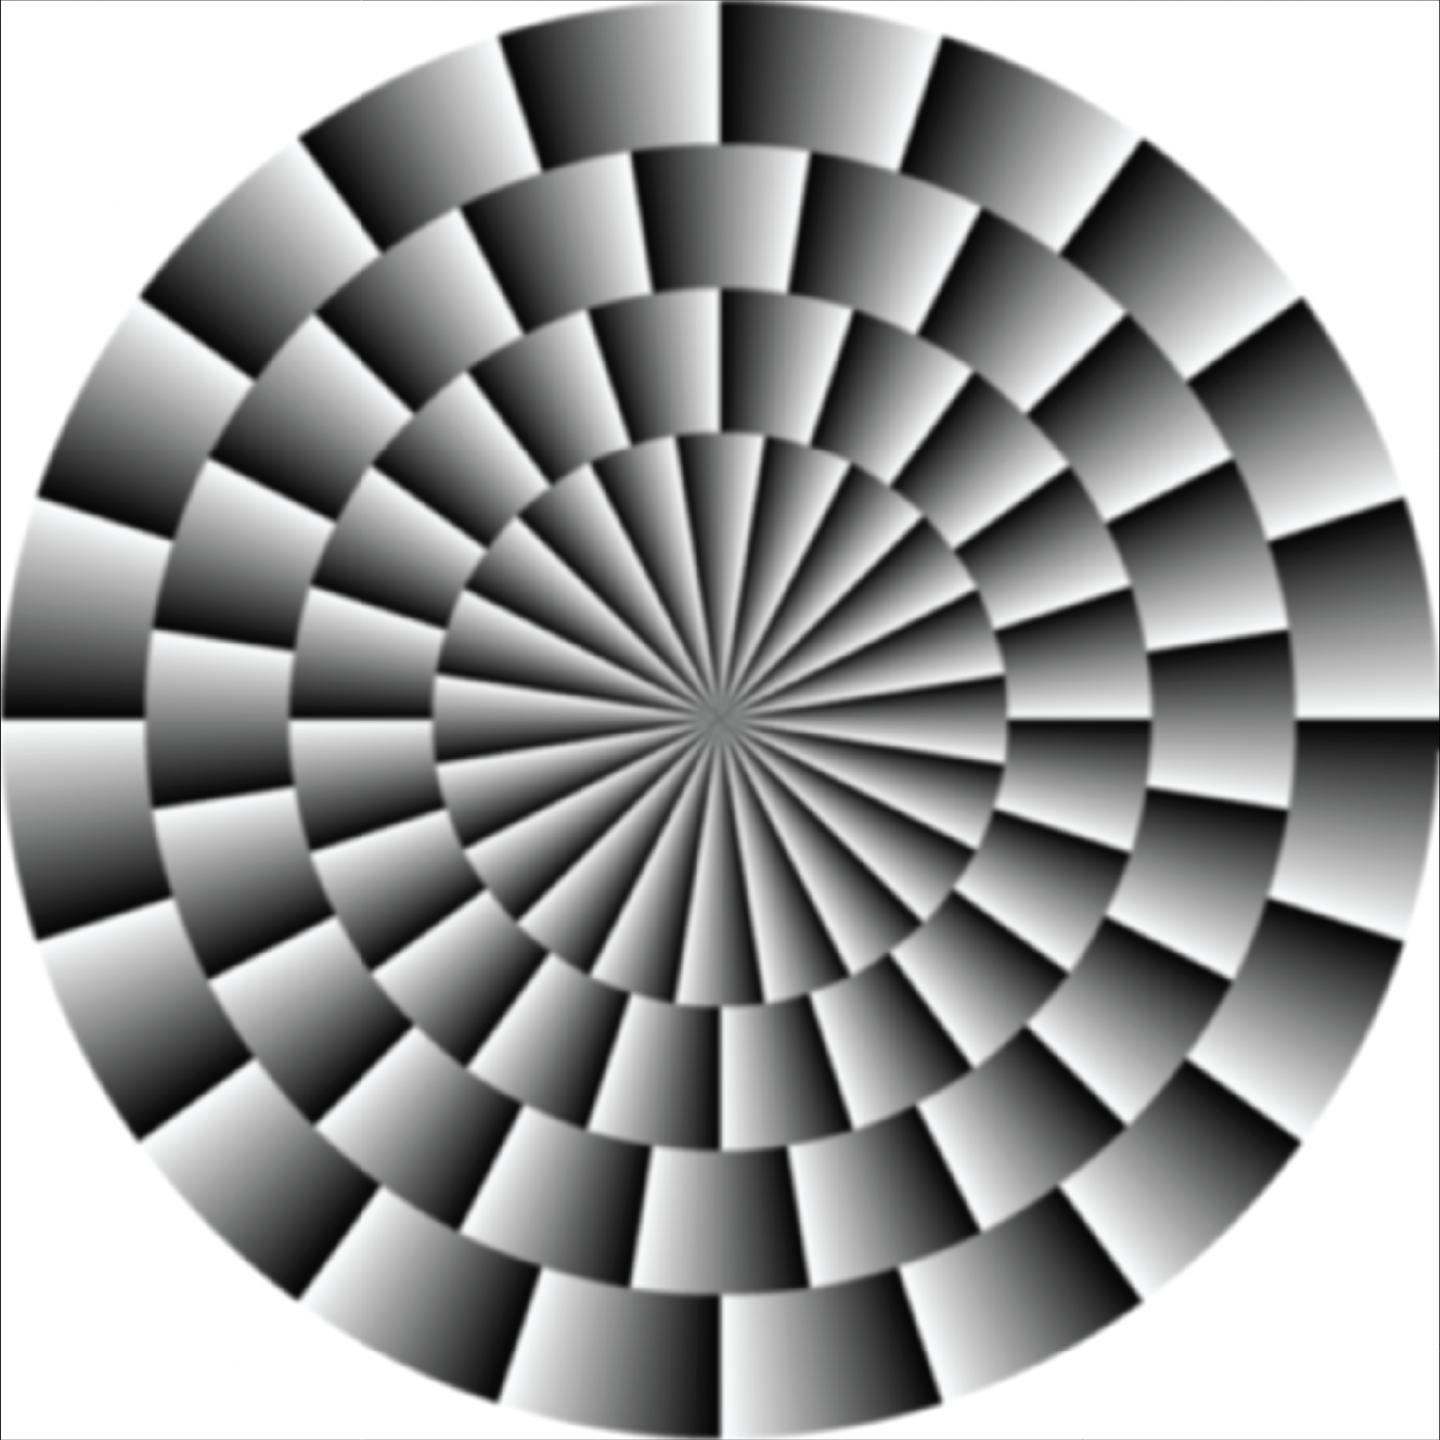 Fraser-Wilcox Illusion